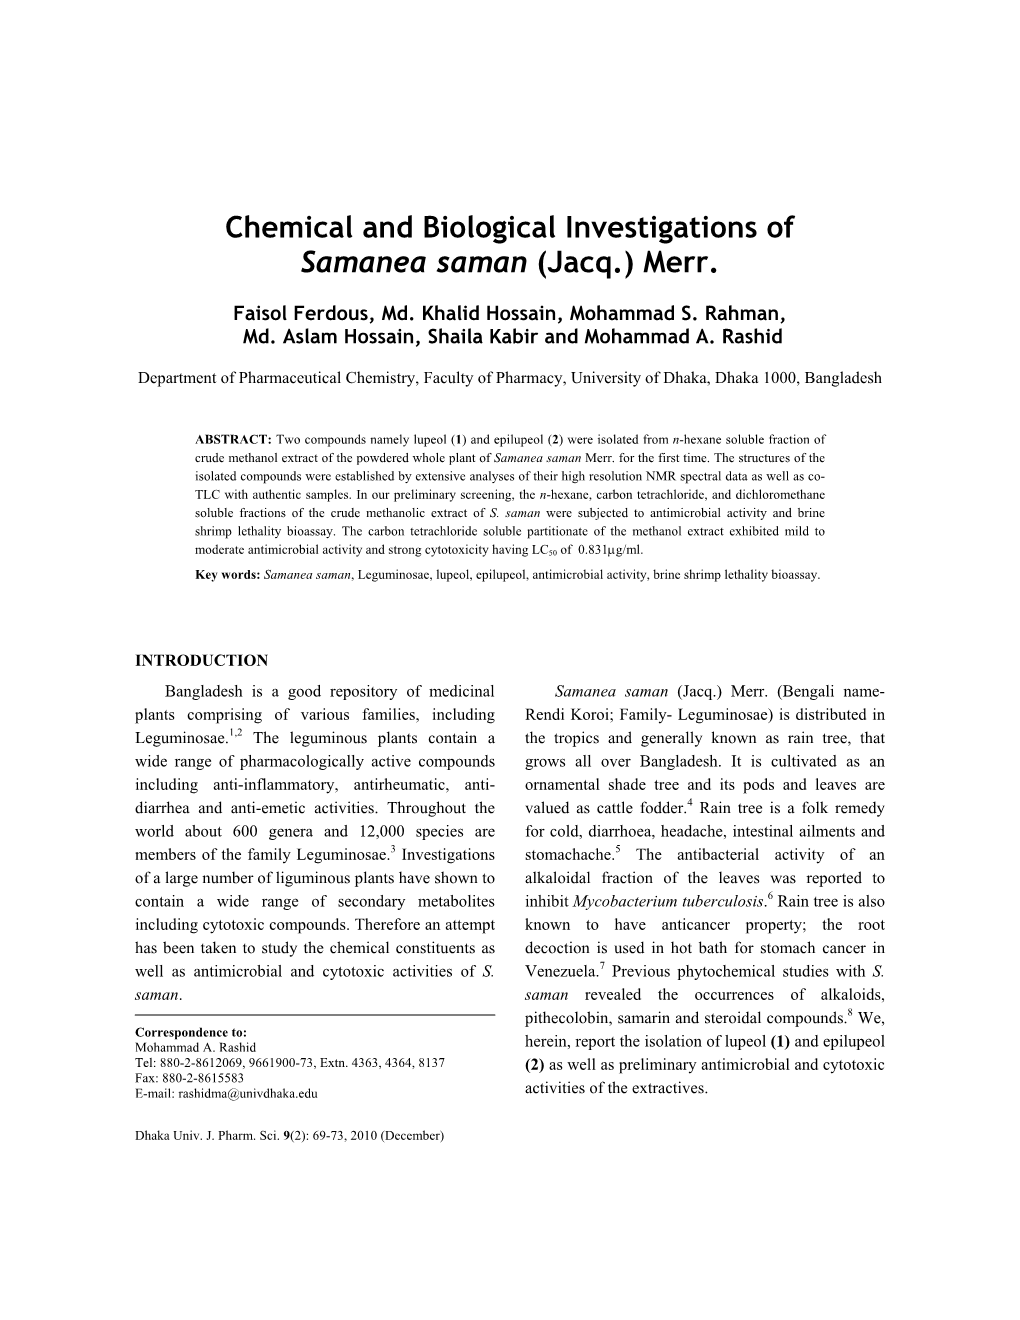 Chemical and Biological Investigations of Samanea Saman (Jacq.) Merr